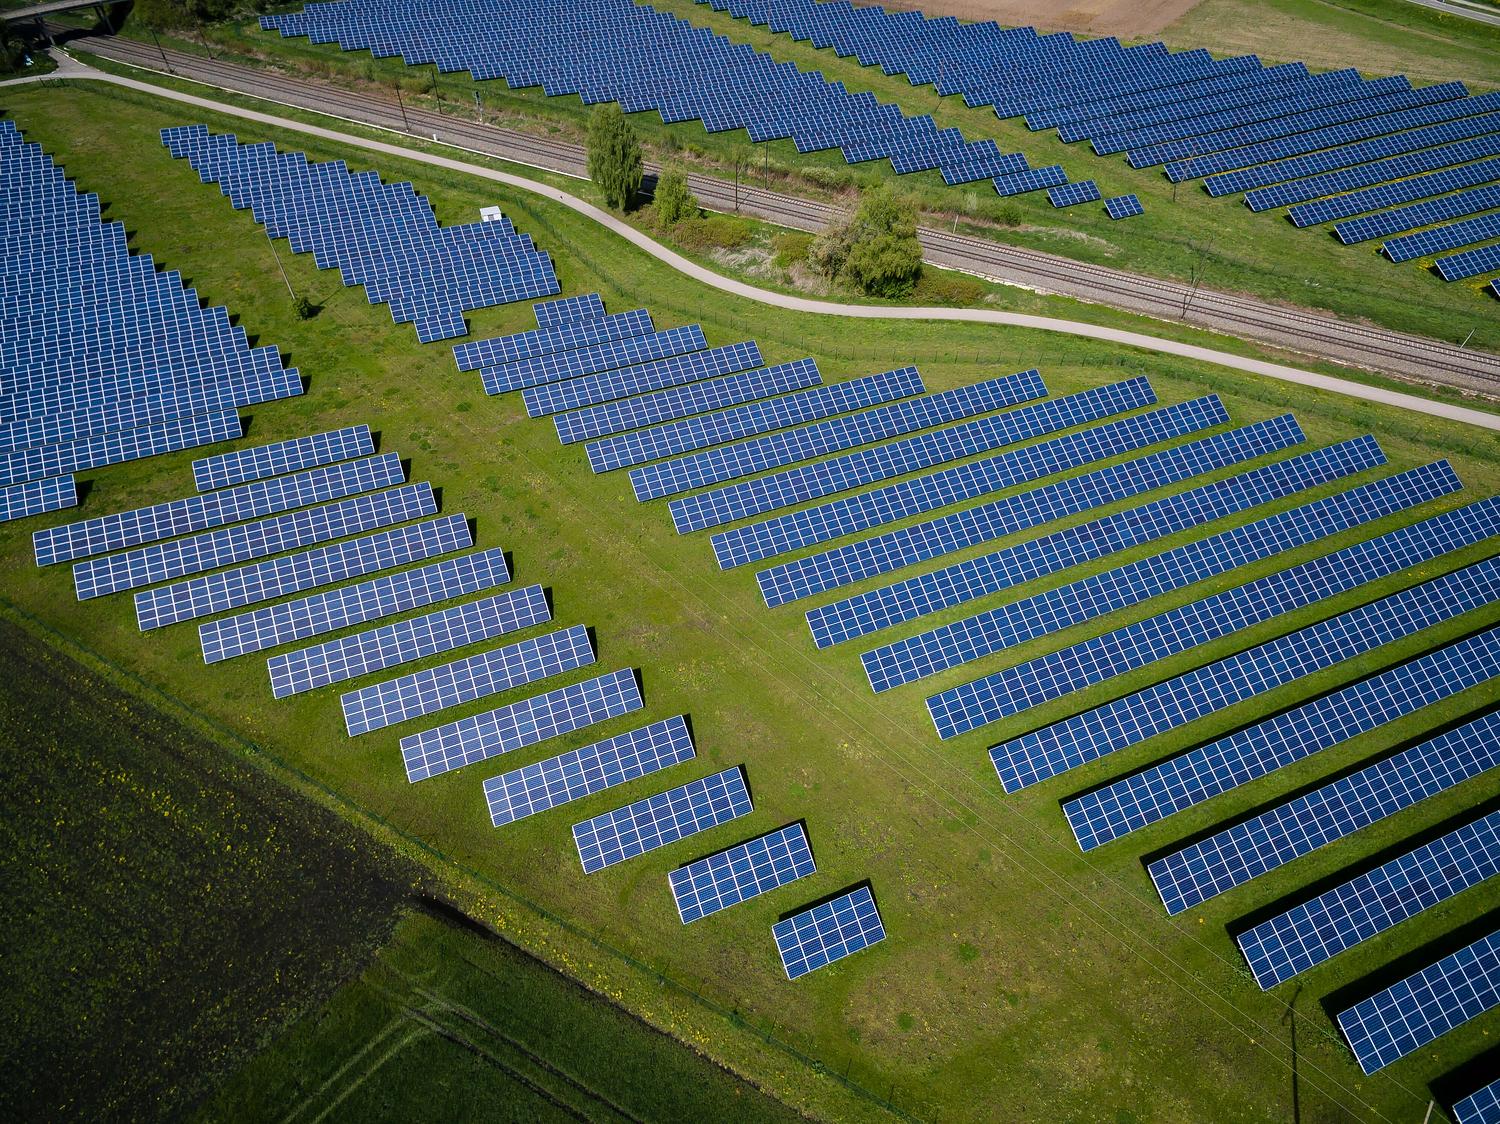 036 | 100 Karin Stark: On-farm renewables